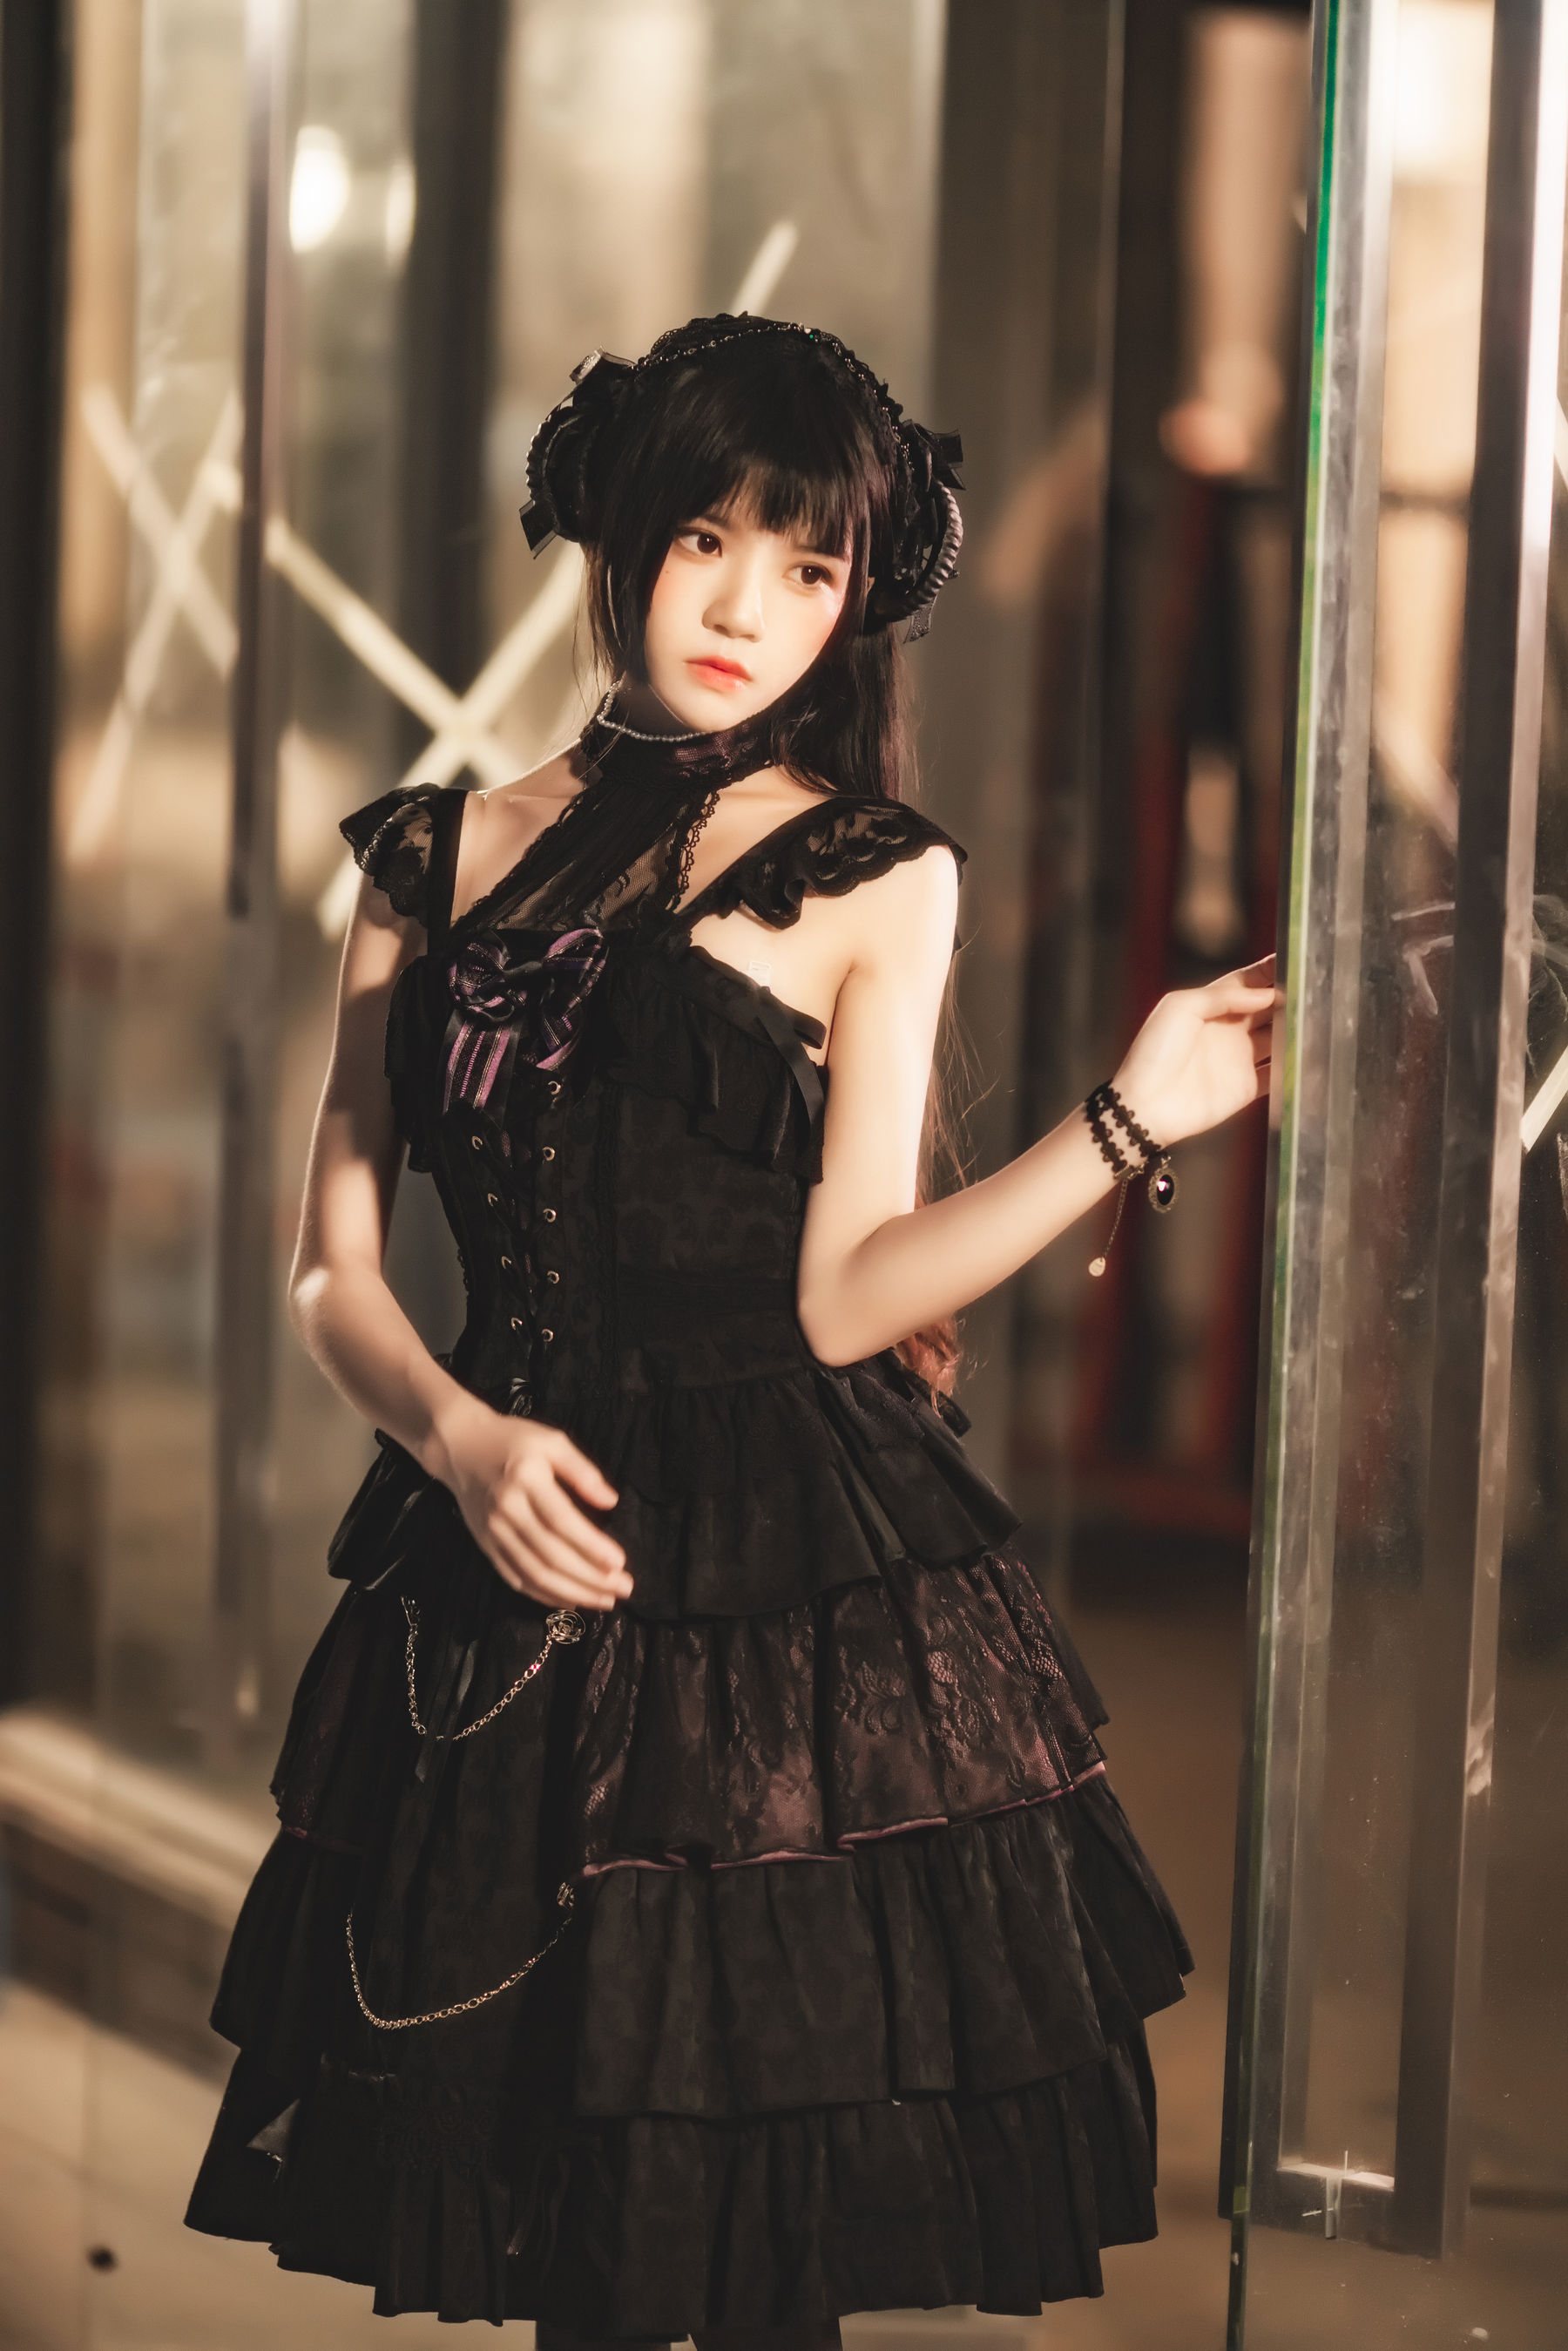 Cherryneko Women Model Asian Long Hair Dark Hair Night Gothic Lolita Black Dress 1800x2698